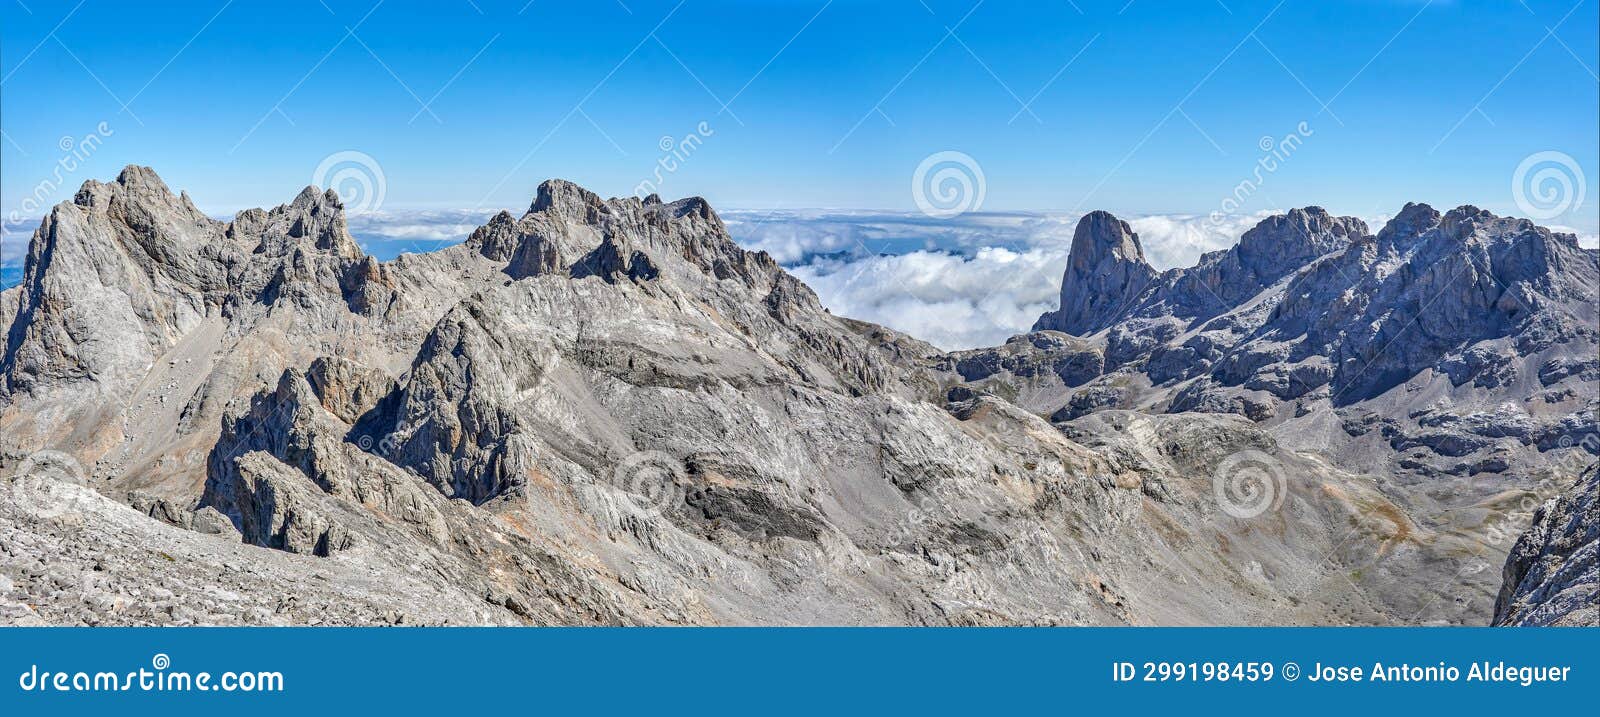 majestic view of the picos de europa national park.